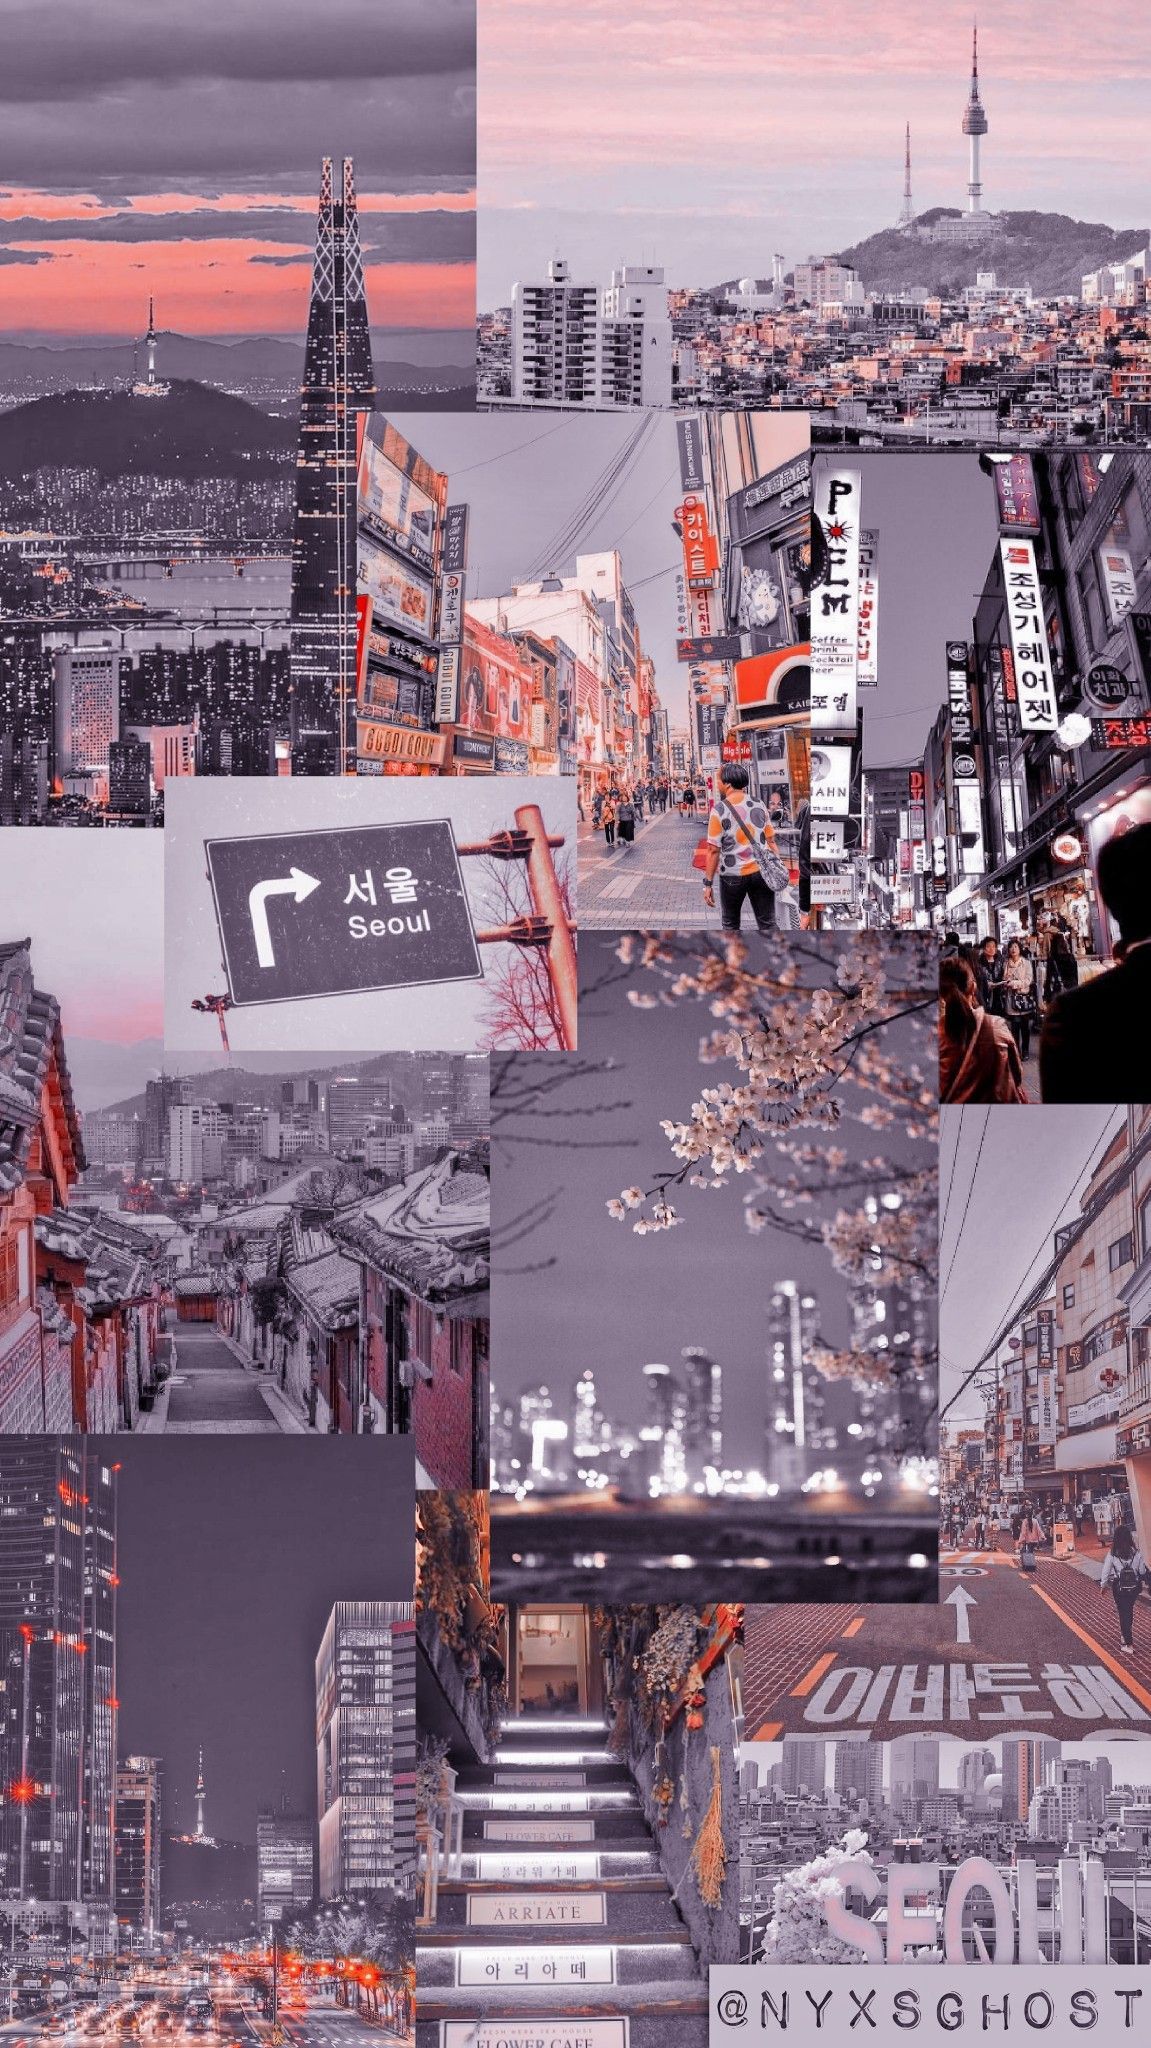 Aesthetic collage of black and white city photos - Seoul, Korean